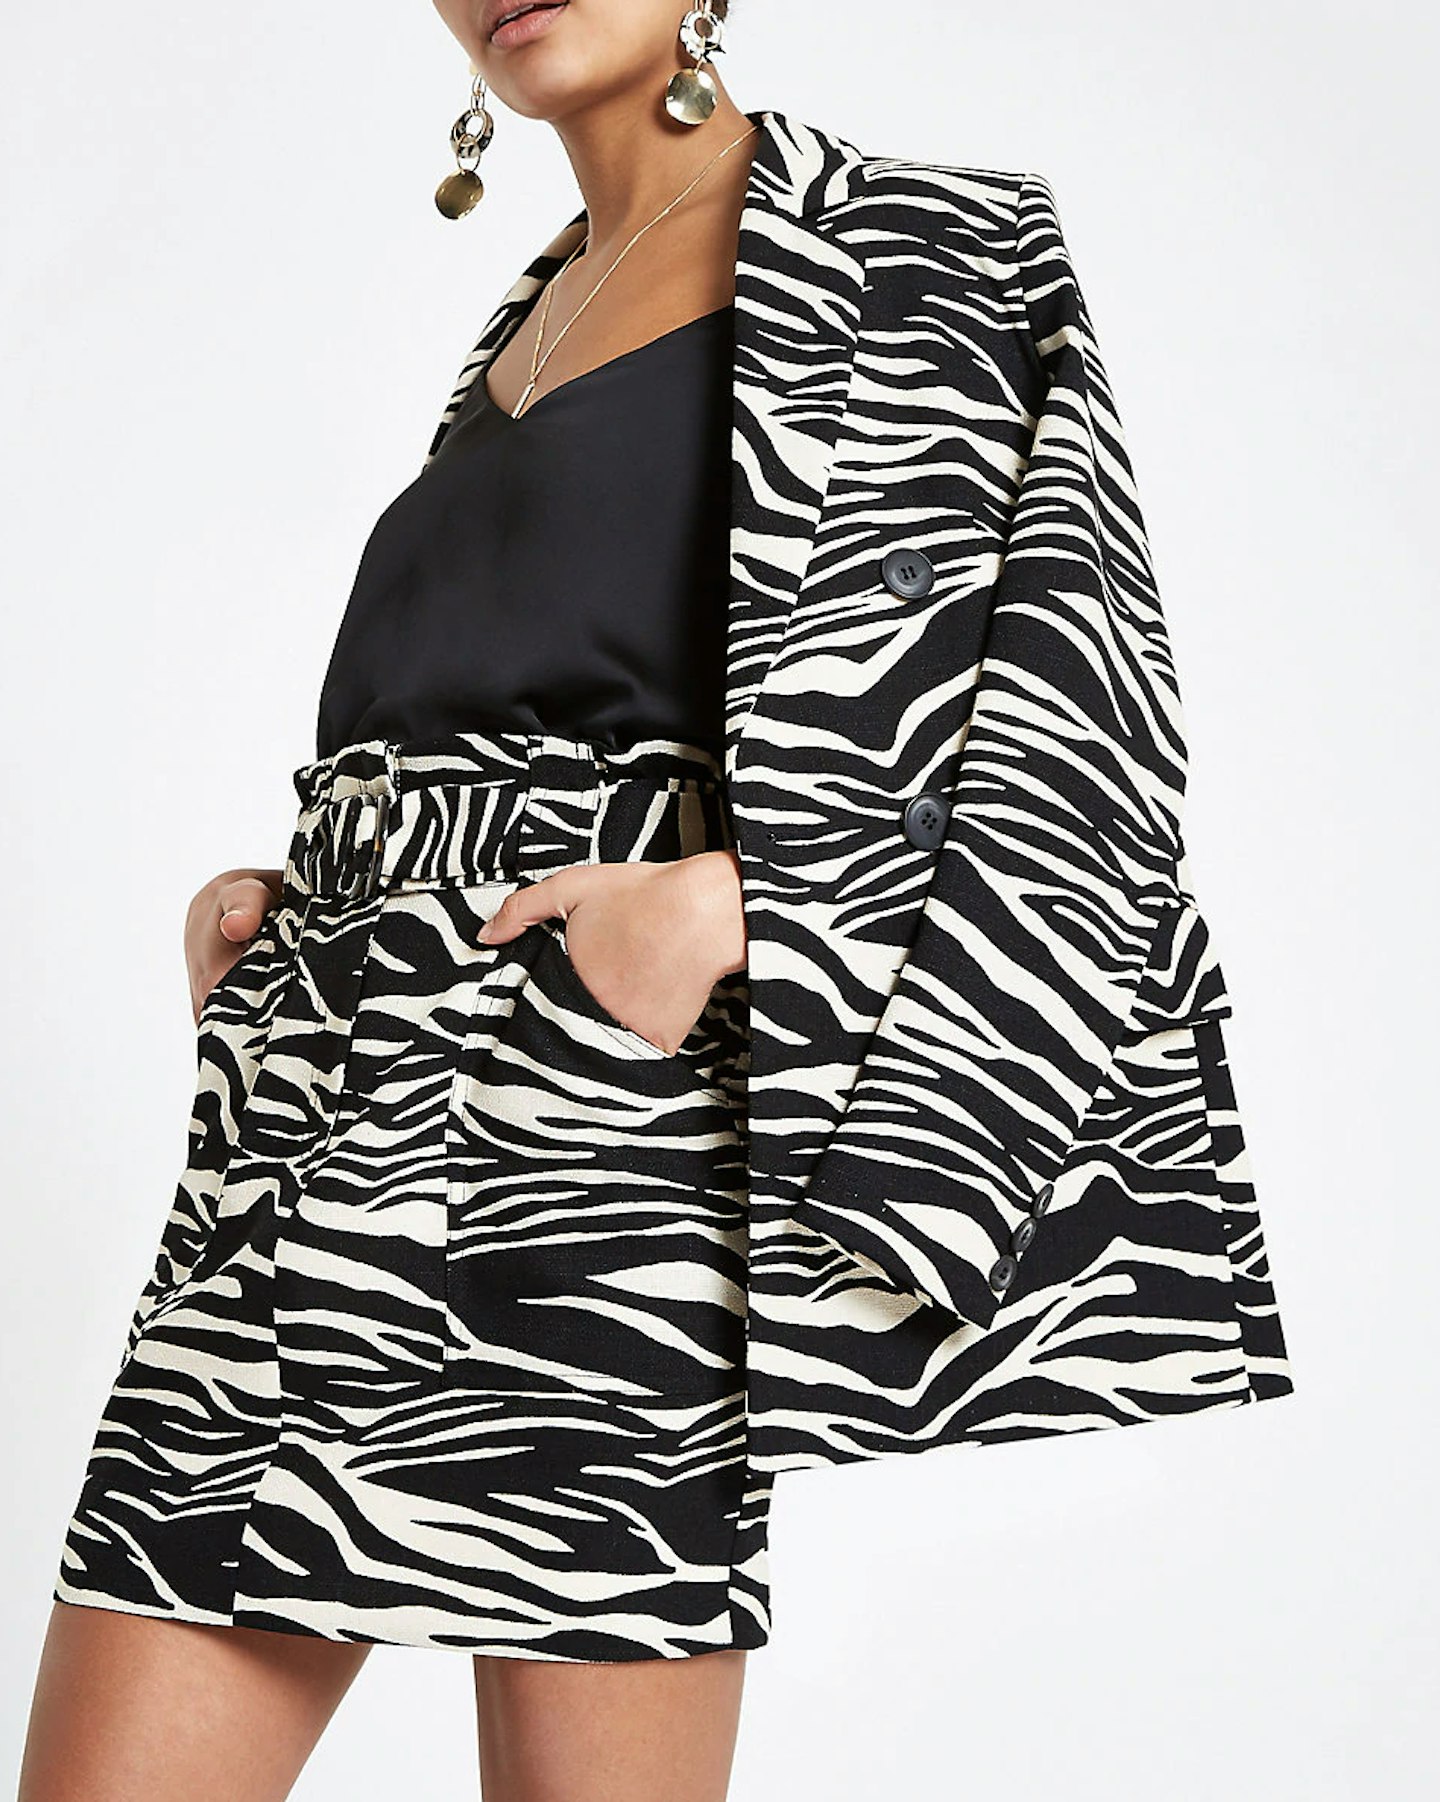 Black Zebra Print Paper Bag Skirt and Blazer, £12 & £35